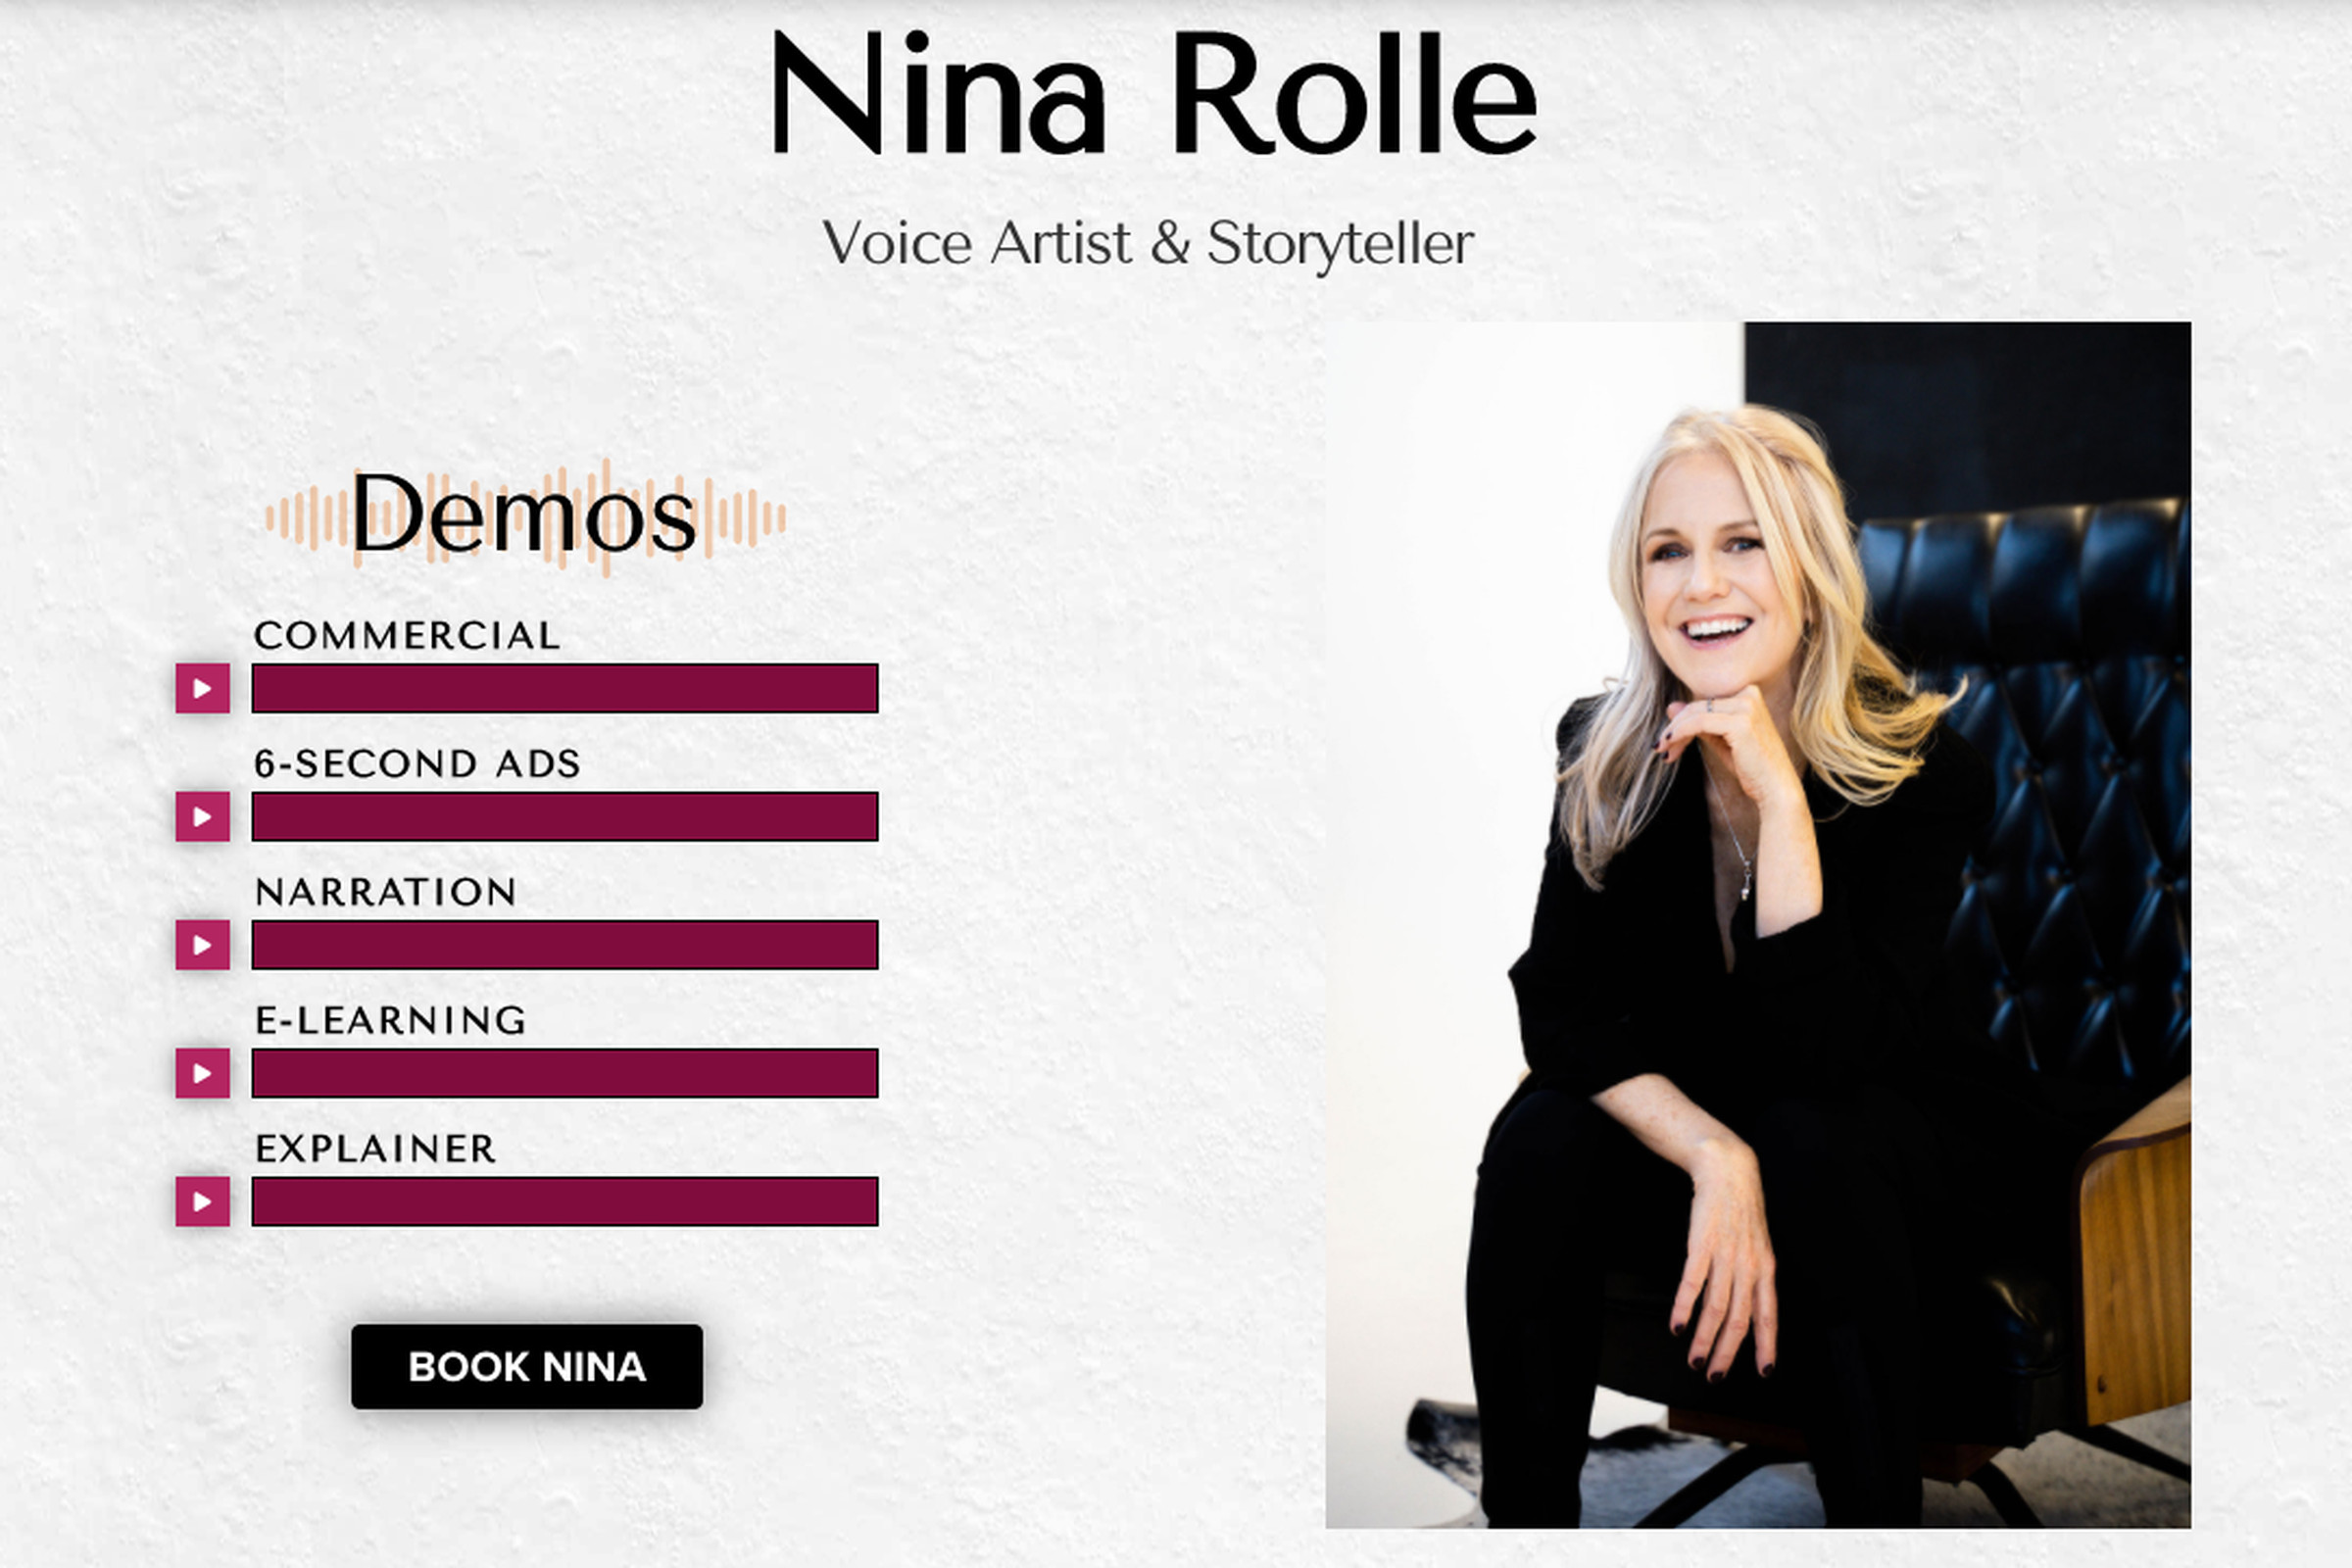 Journalist Brad Stone says Nina Rolle is the original voice of Alexa. 